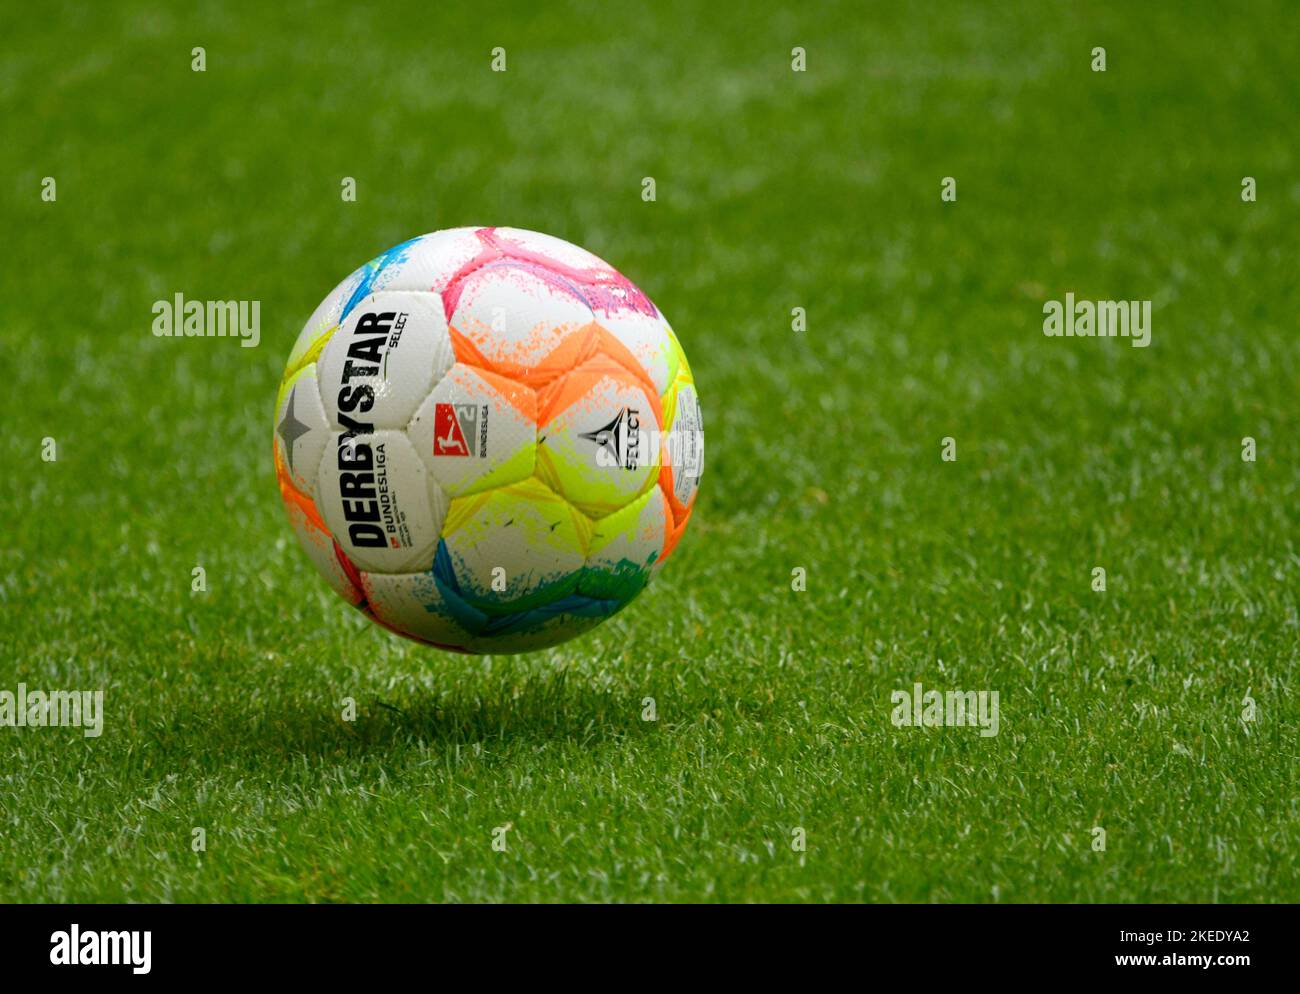 German Bundesliga Unveils Official Derbystar Match Balls for 2022